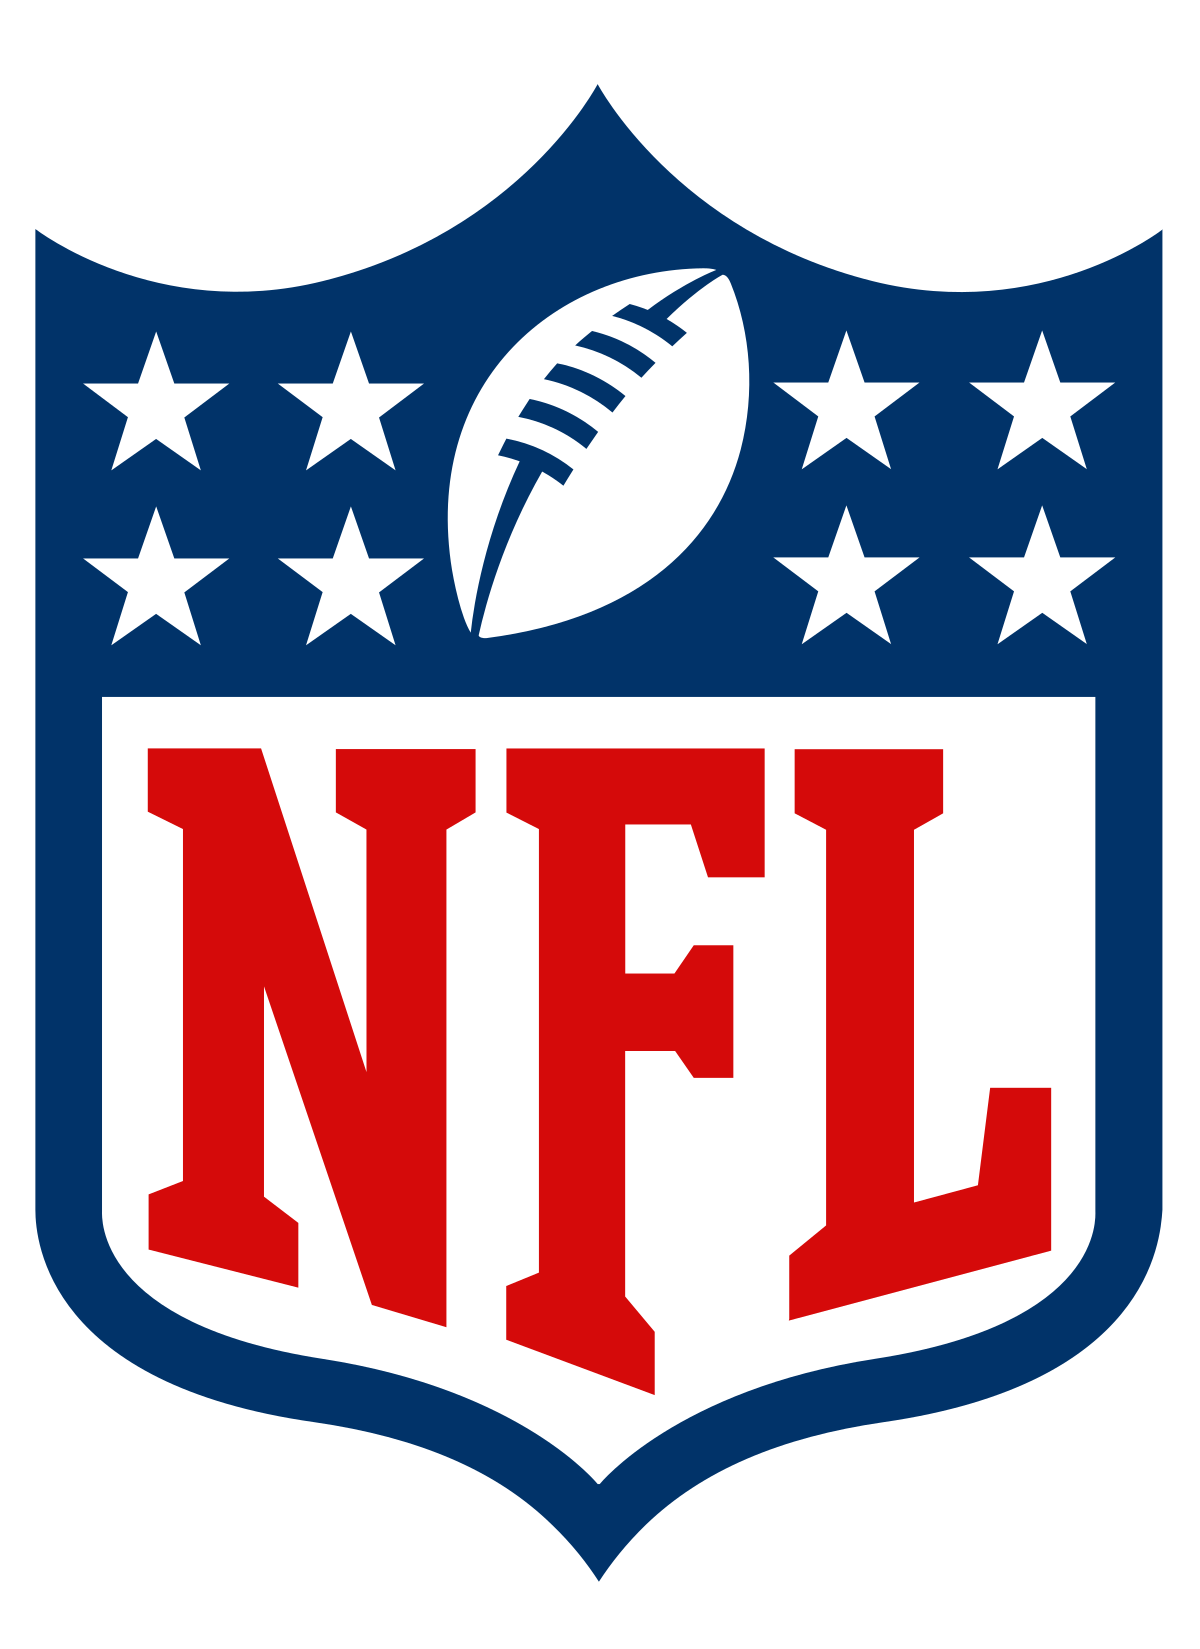 National Football League logo.svg